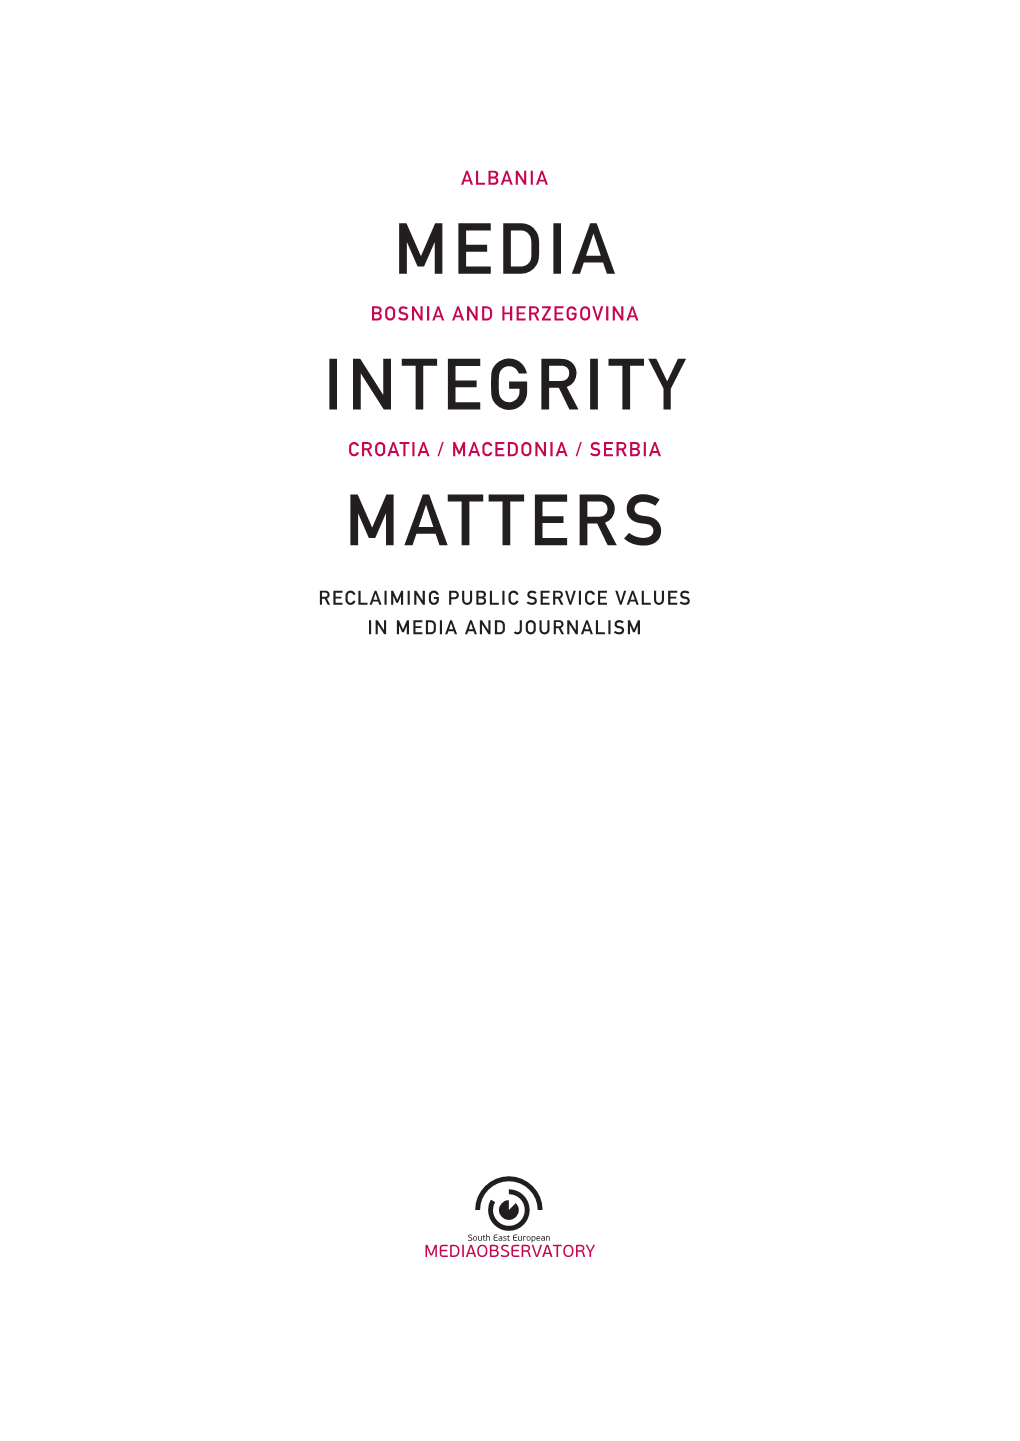 Media Integrity Matters